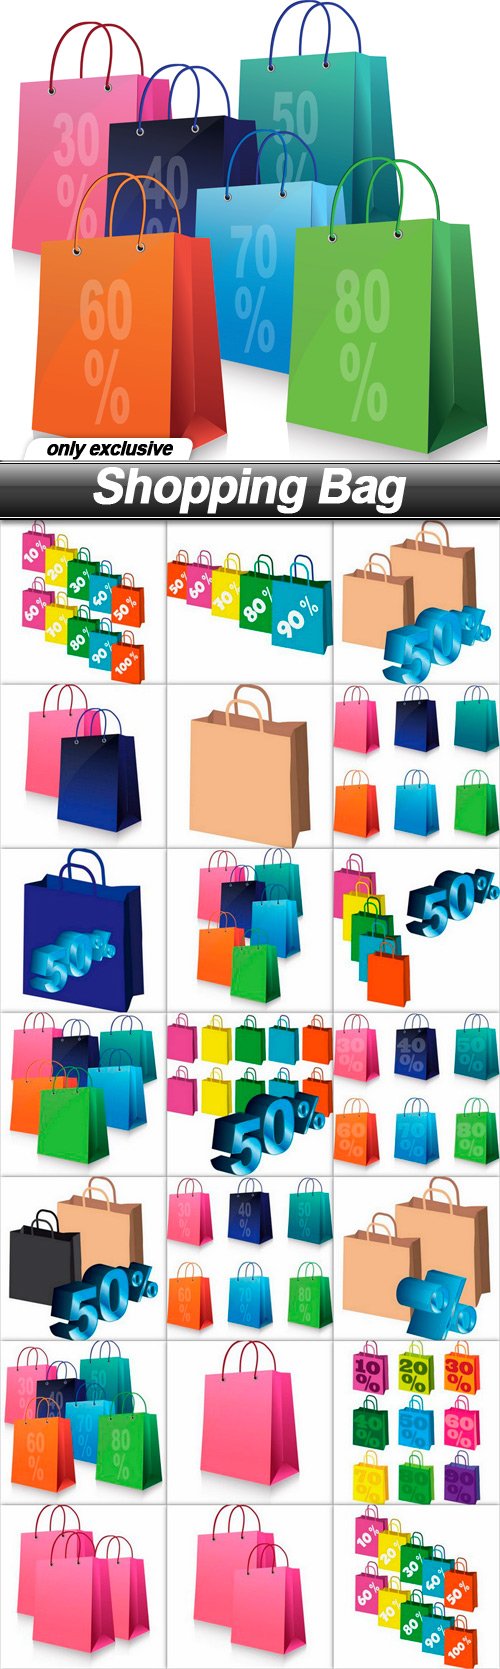 Shopping Bag 3 - 20 EPS